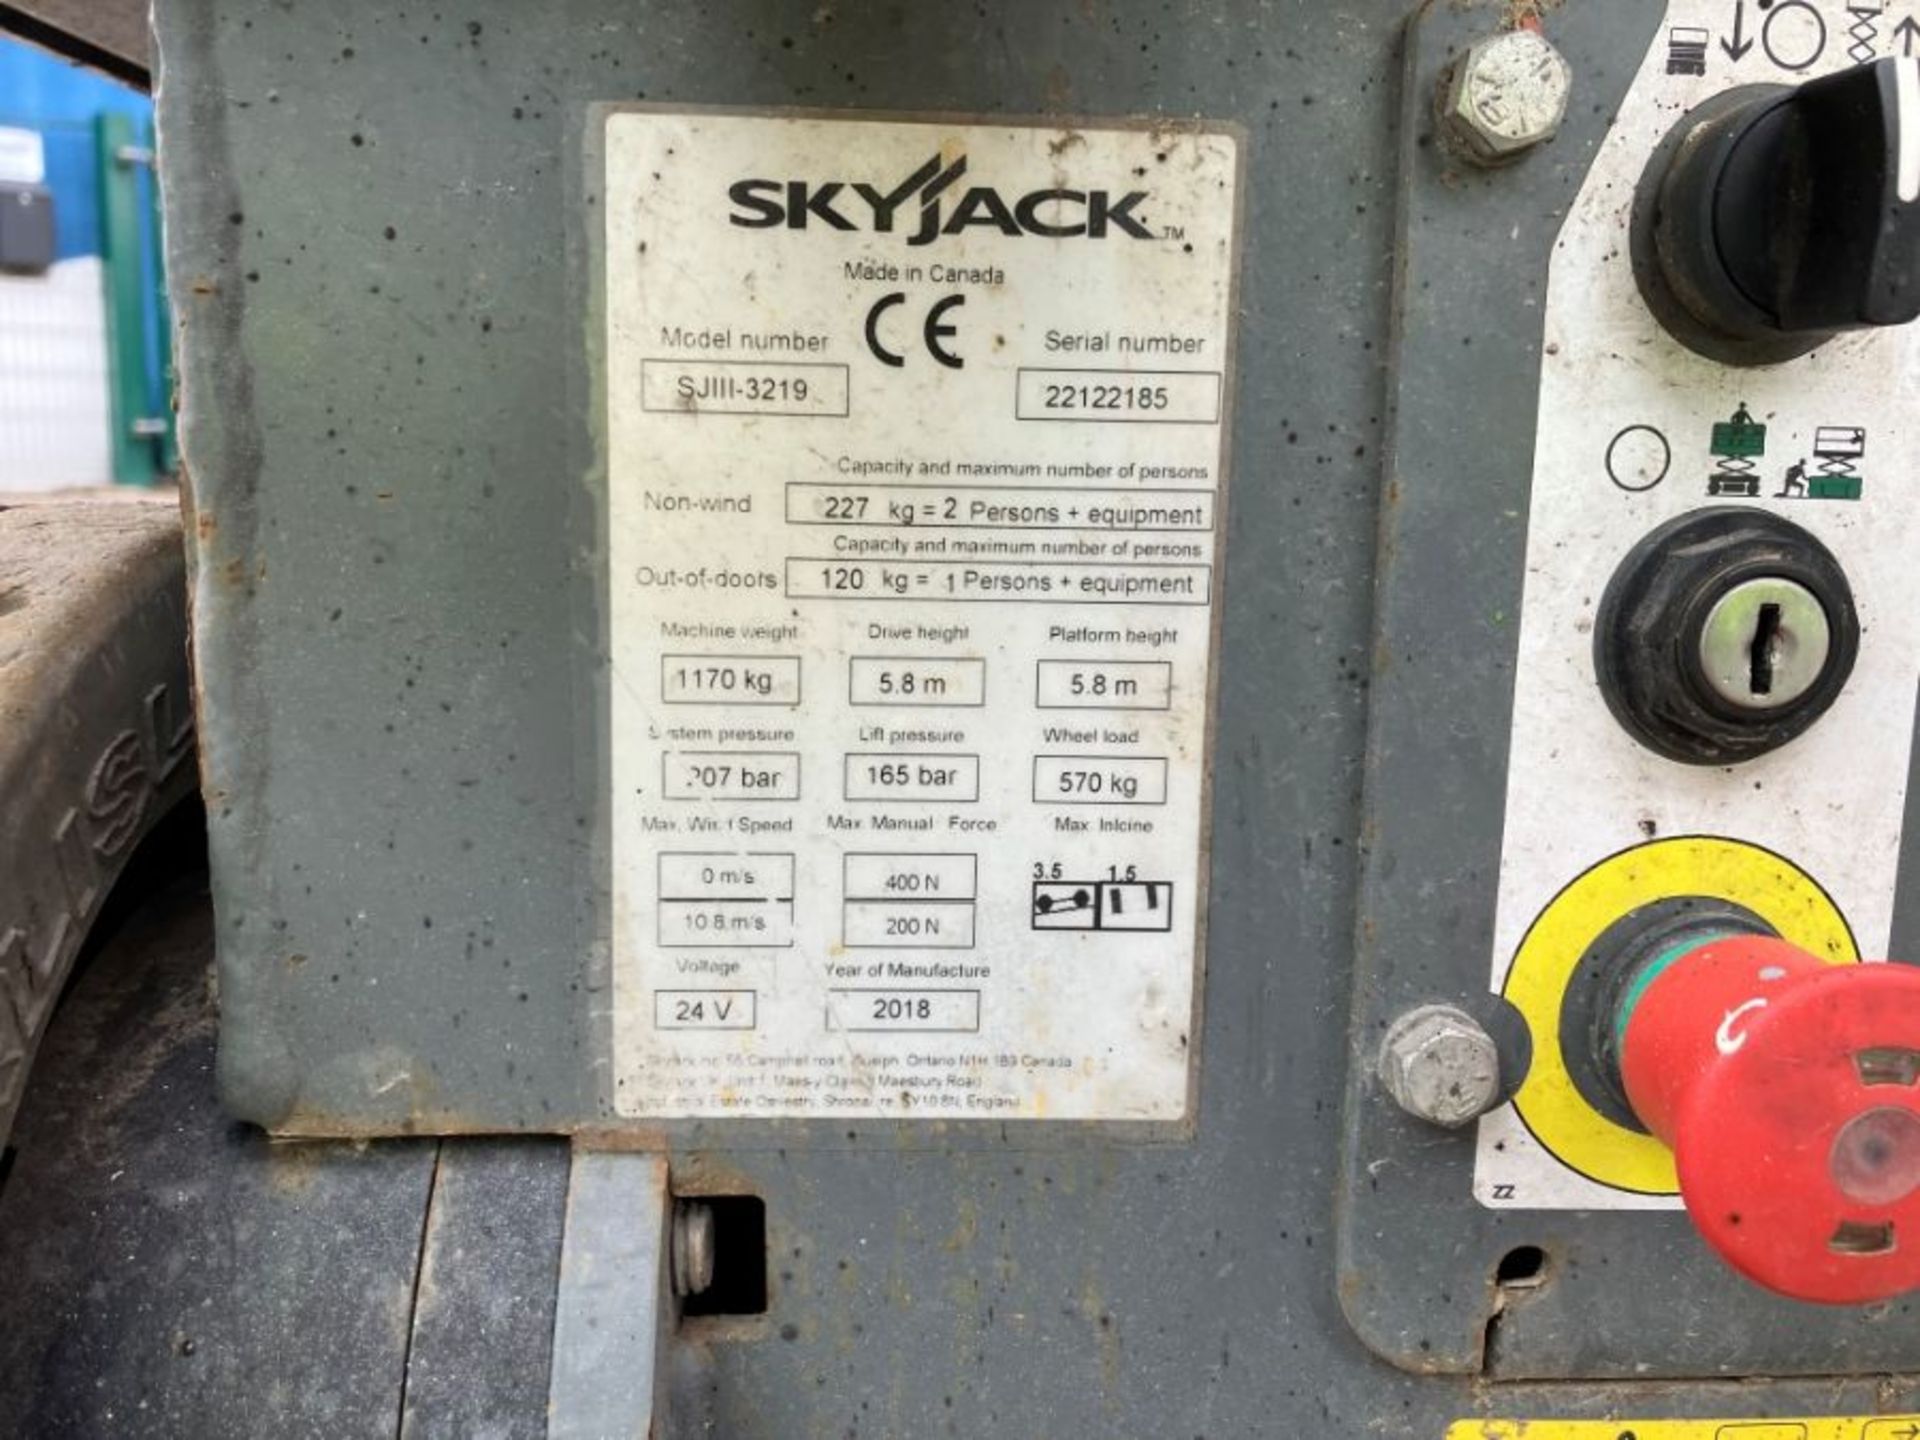 Skyjack SJIII 3219 electric scissor lift access platform (2018) - Image 2 of 8